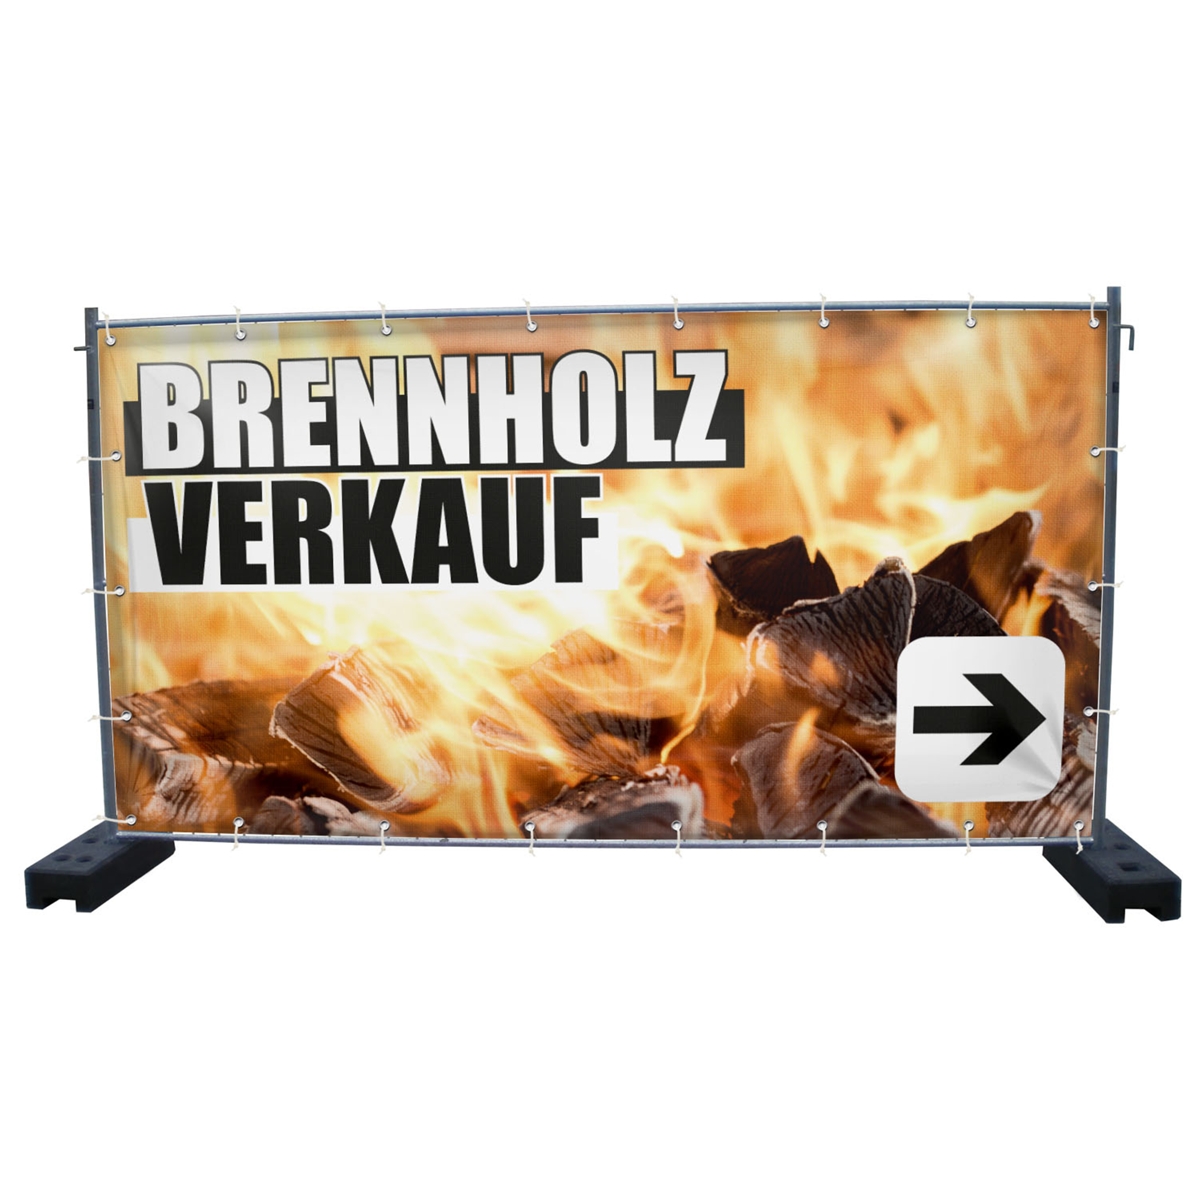 340 x 173 cm | Brennholz Verkauf Bauzaunbanner (4105)